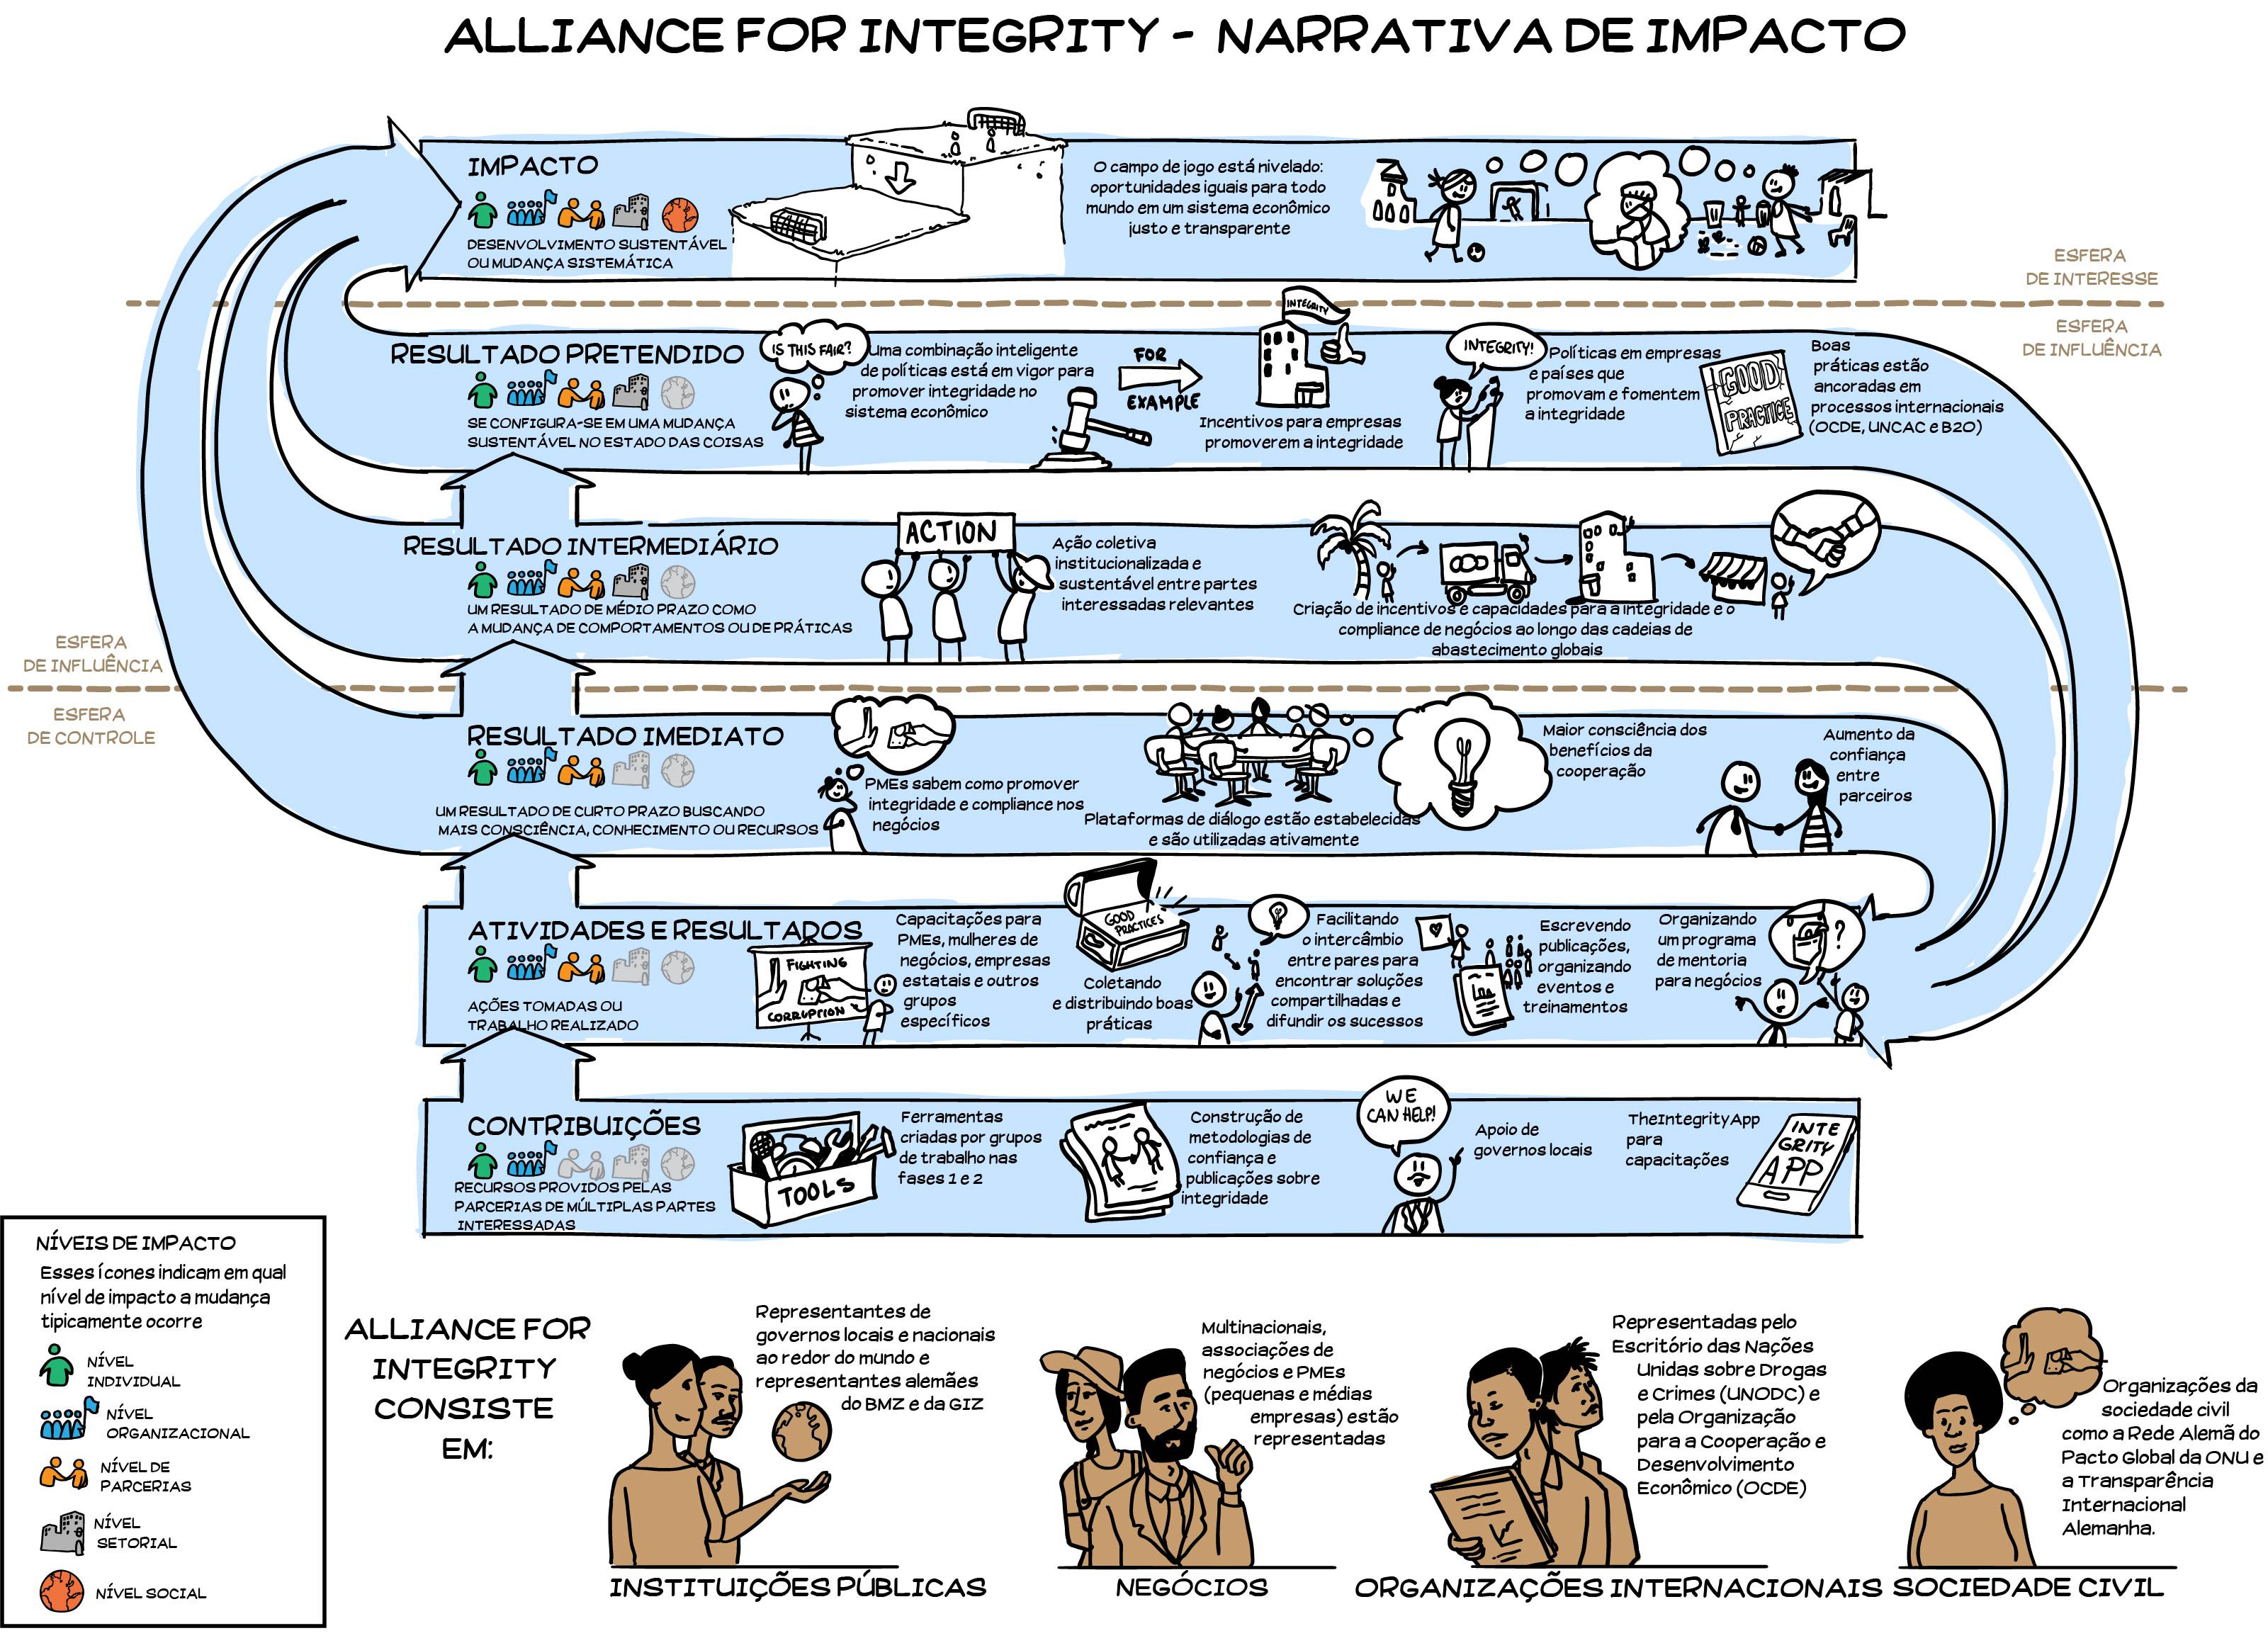 Impact Narrative -Alliance for Integrity - Portuguese